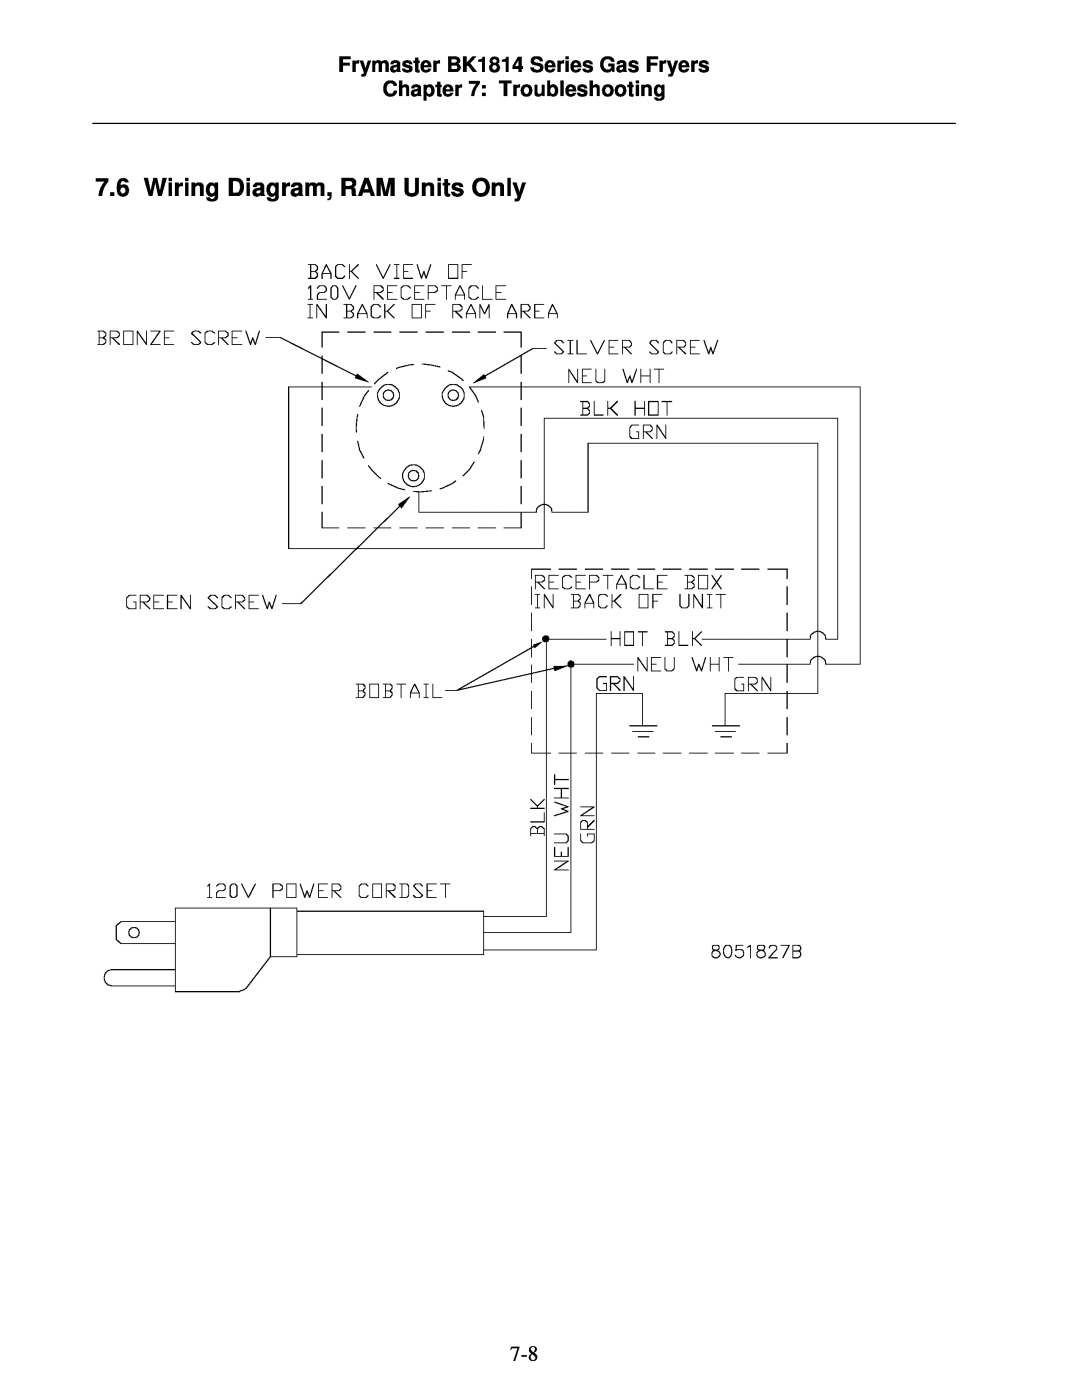 Frymaster operation manual Wiring Diagram, RAM Units Only, Frymaster BK1814 Series Gas Fryers Troubleshooting 